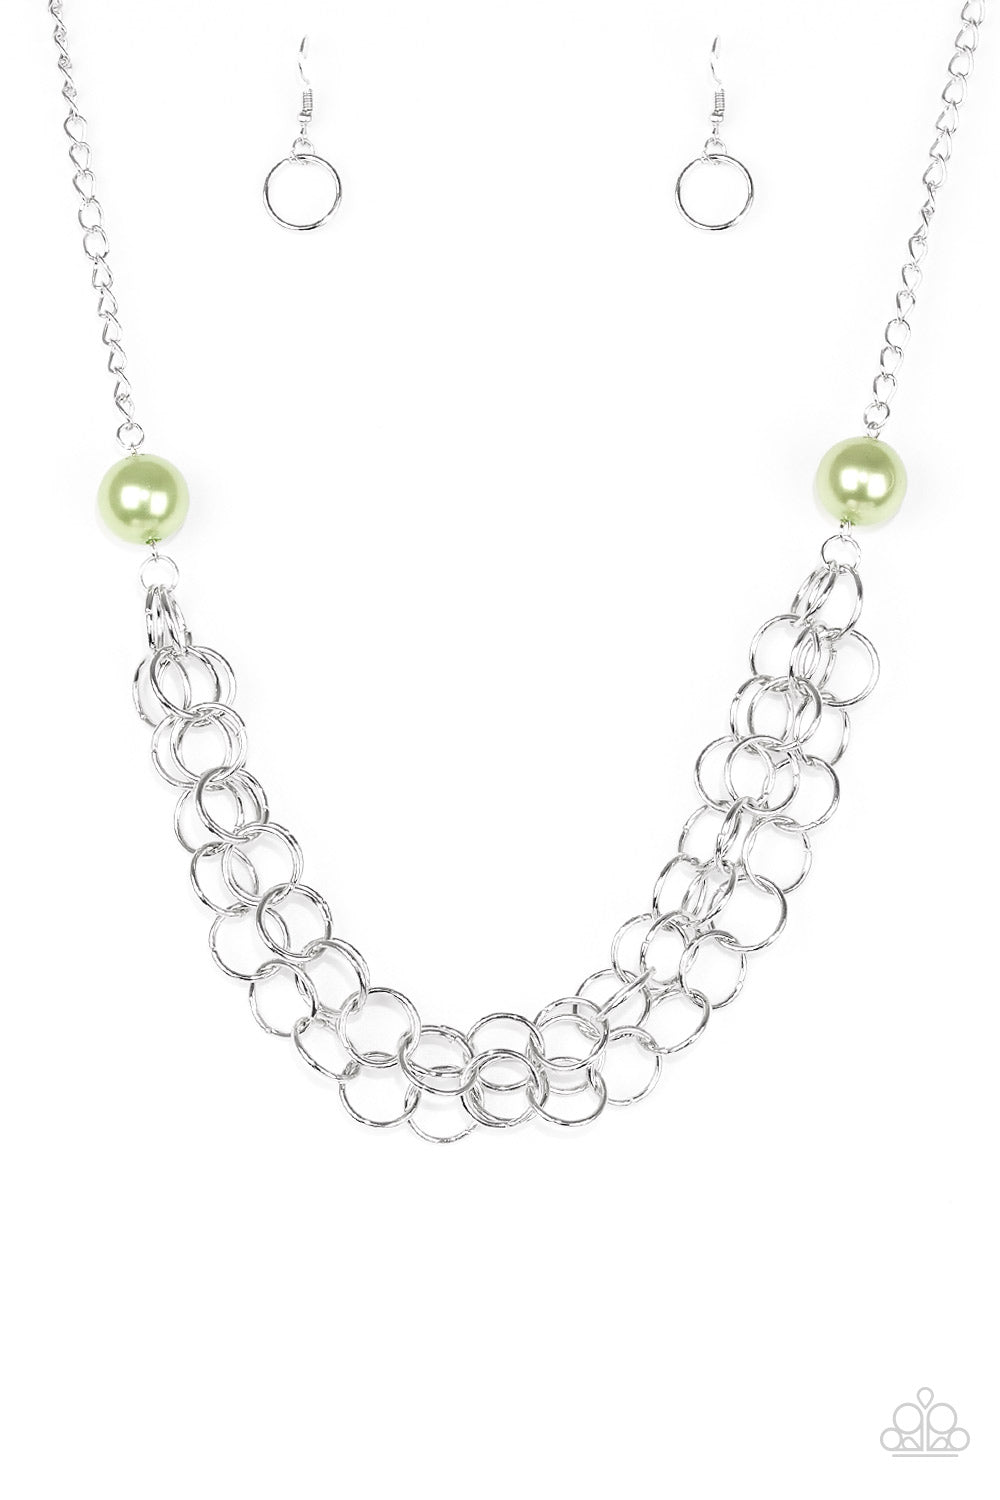 Daring Diva - Green necklace